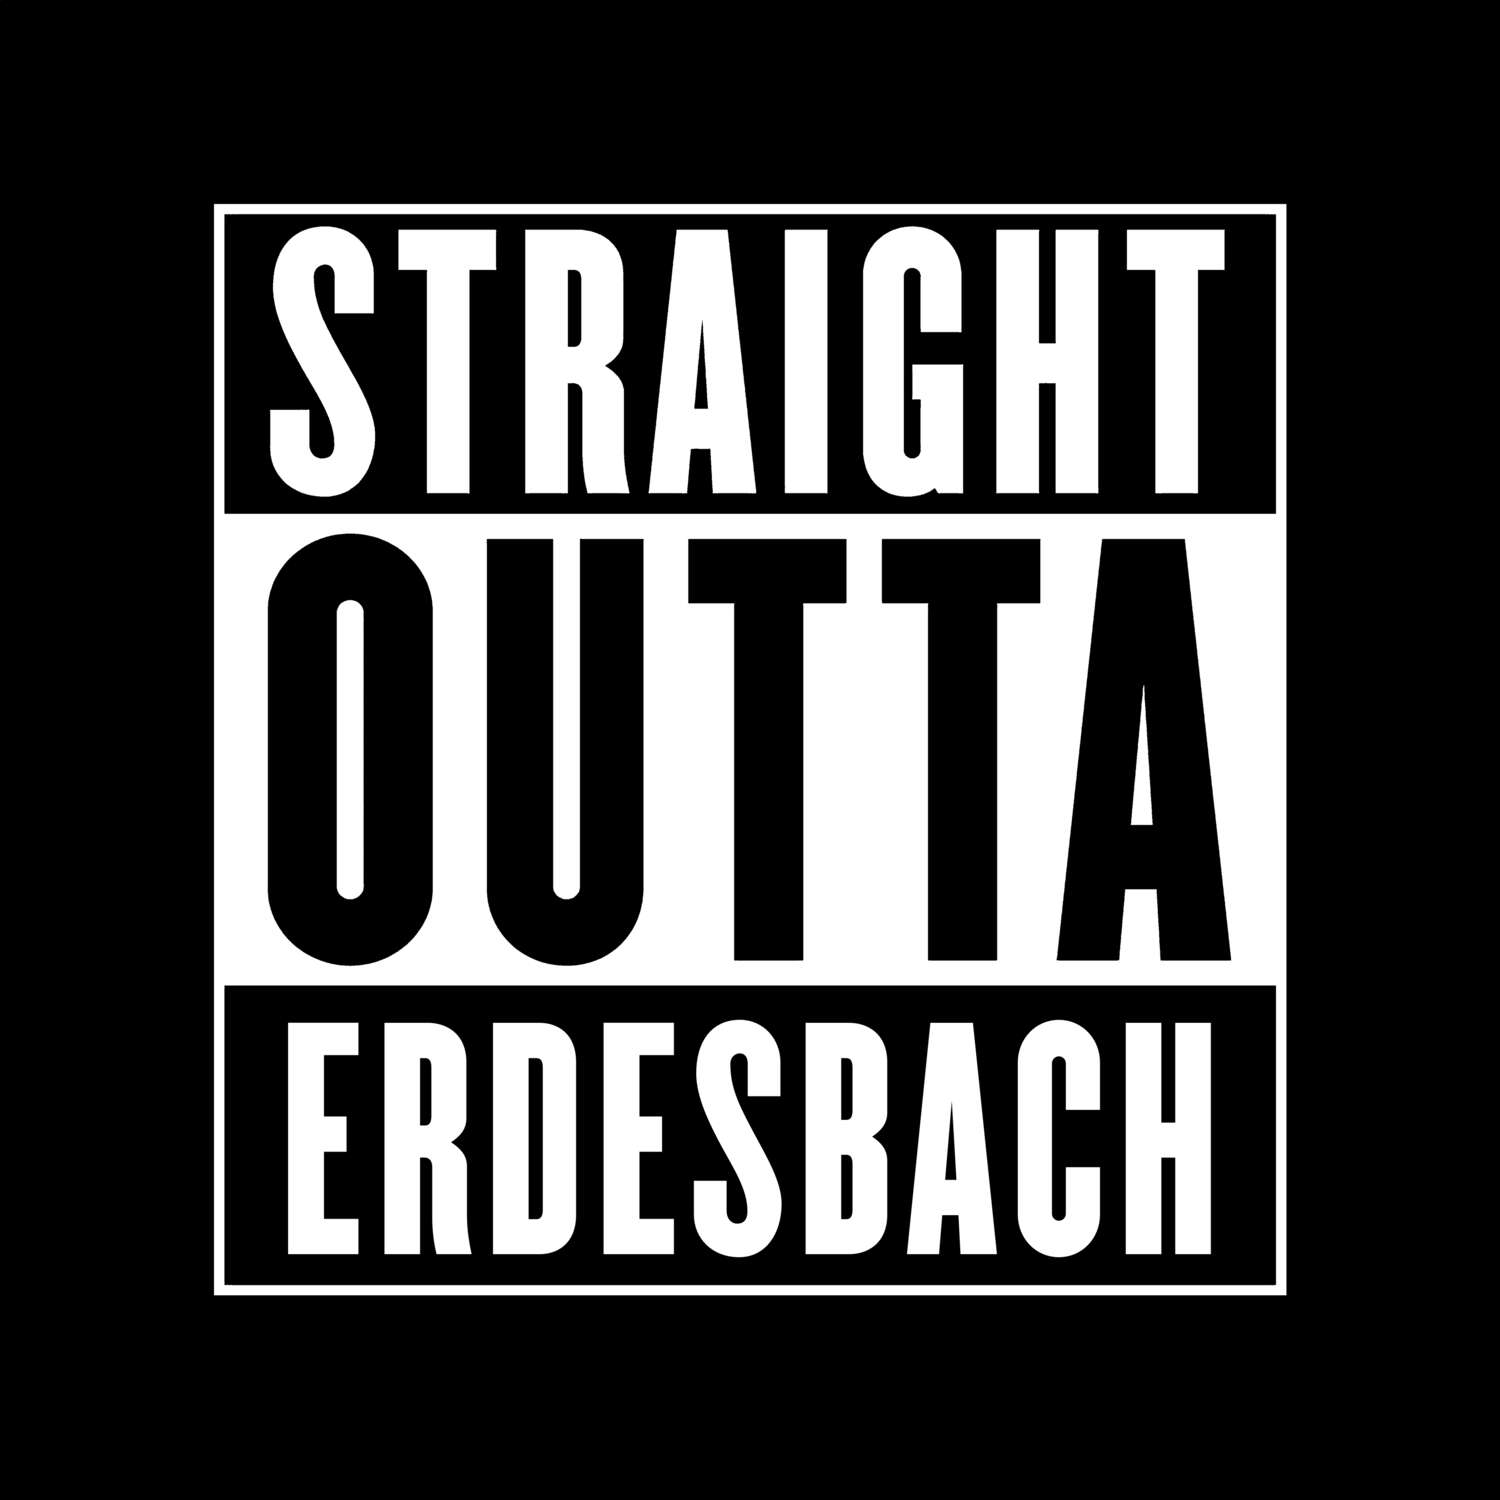 Erdesbach T-Shirt »Straight Outta«